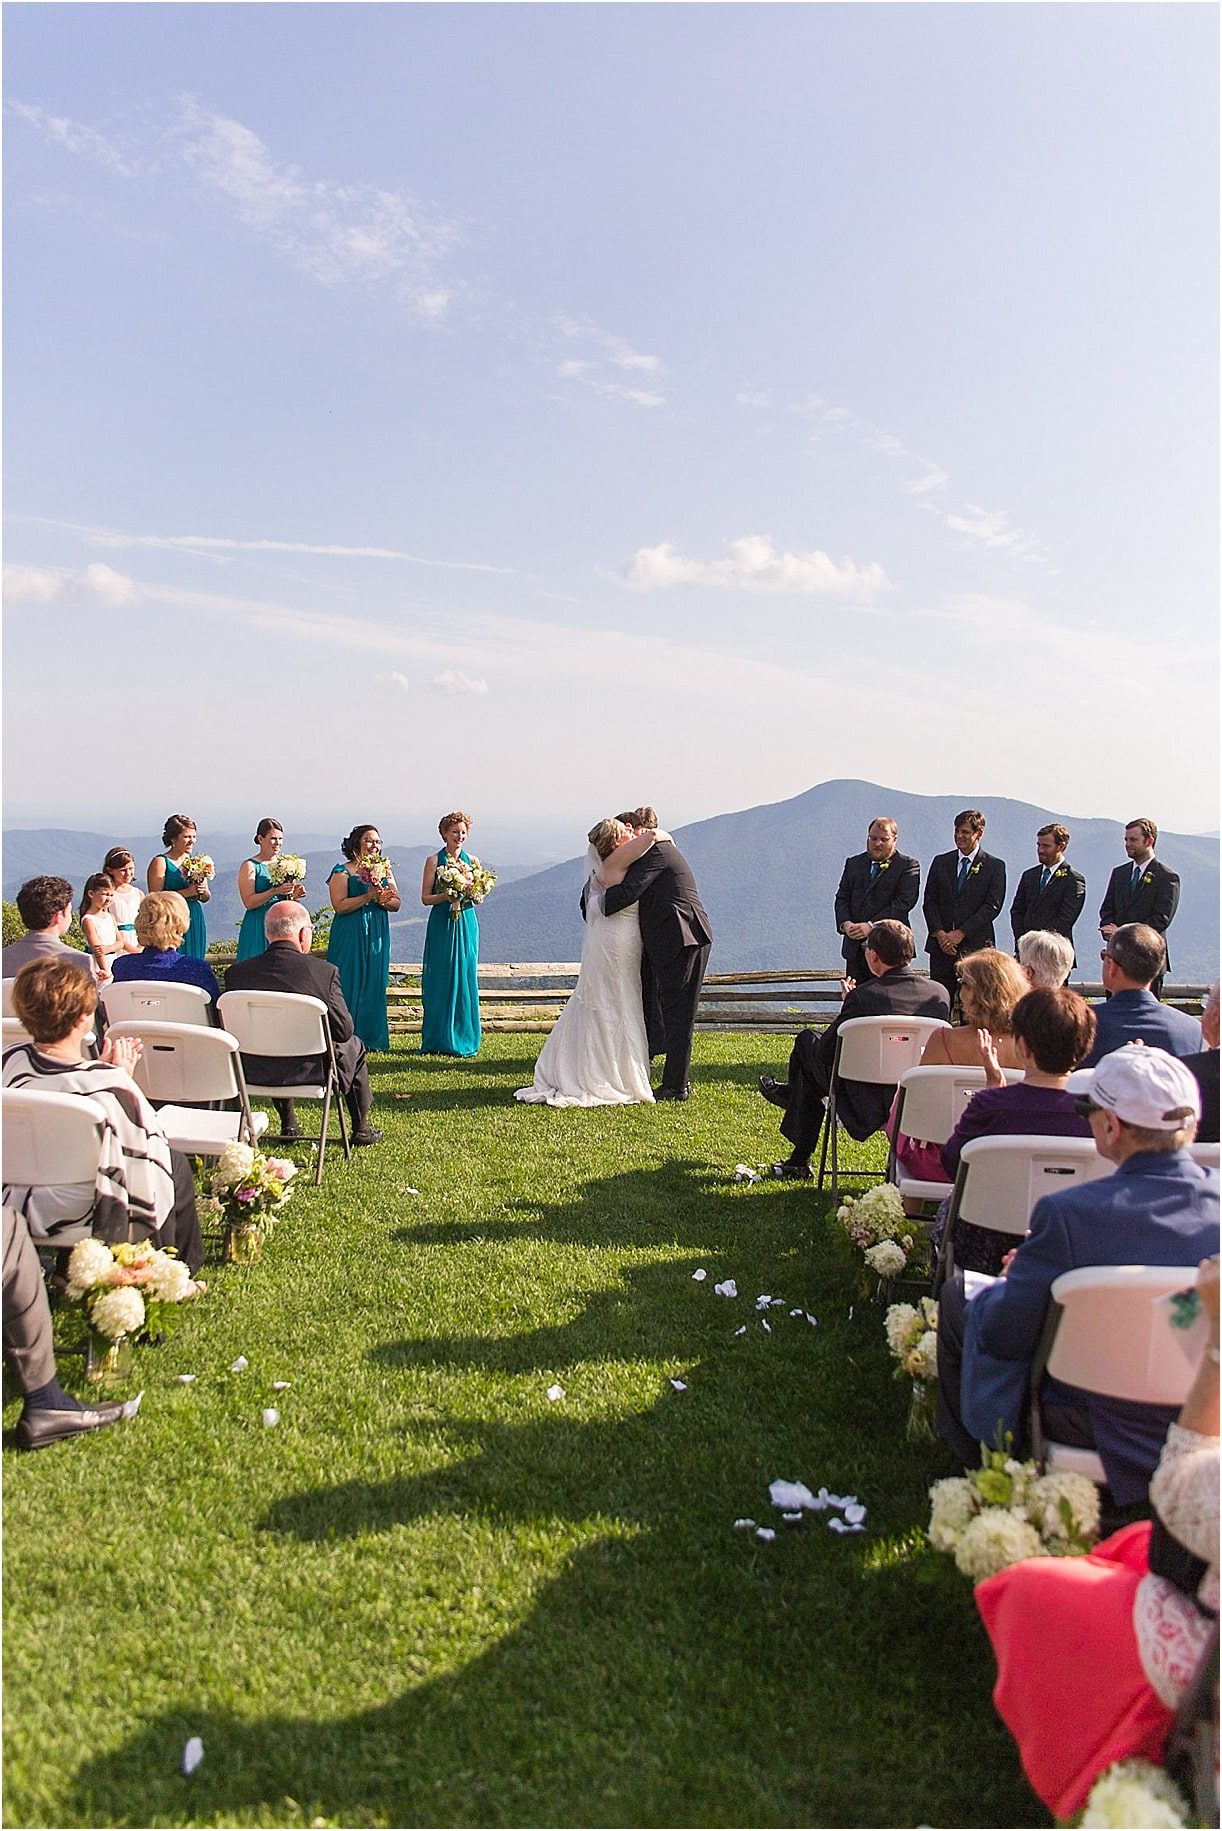 Virginia Ski Resort Wedding at Wintergreen as seen on Hill City Bride Wedding Blog by Ashley Eiban - ceremony, mountains